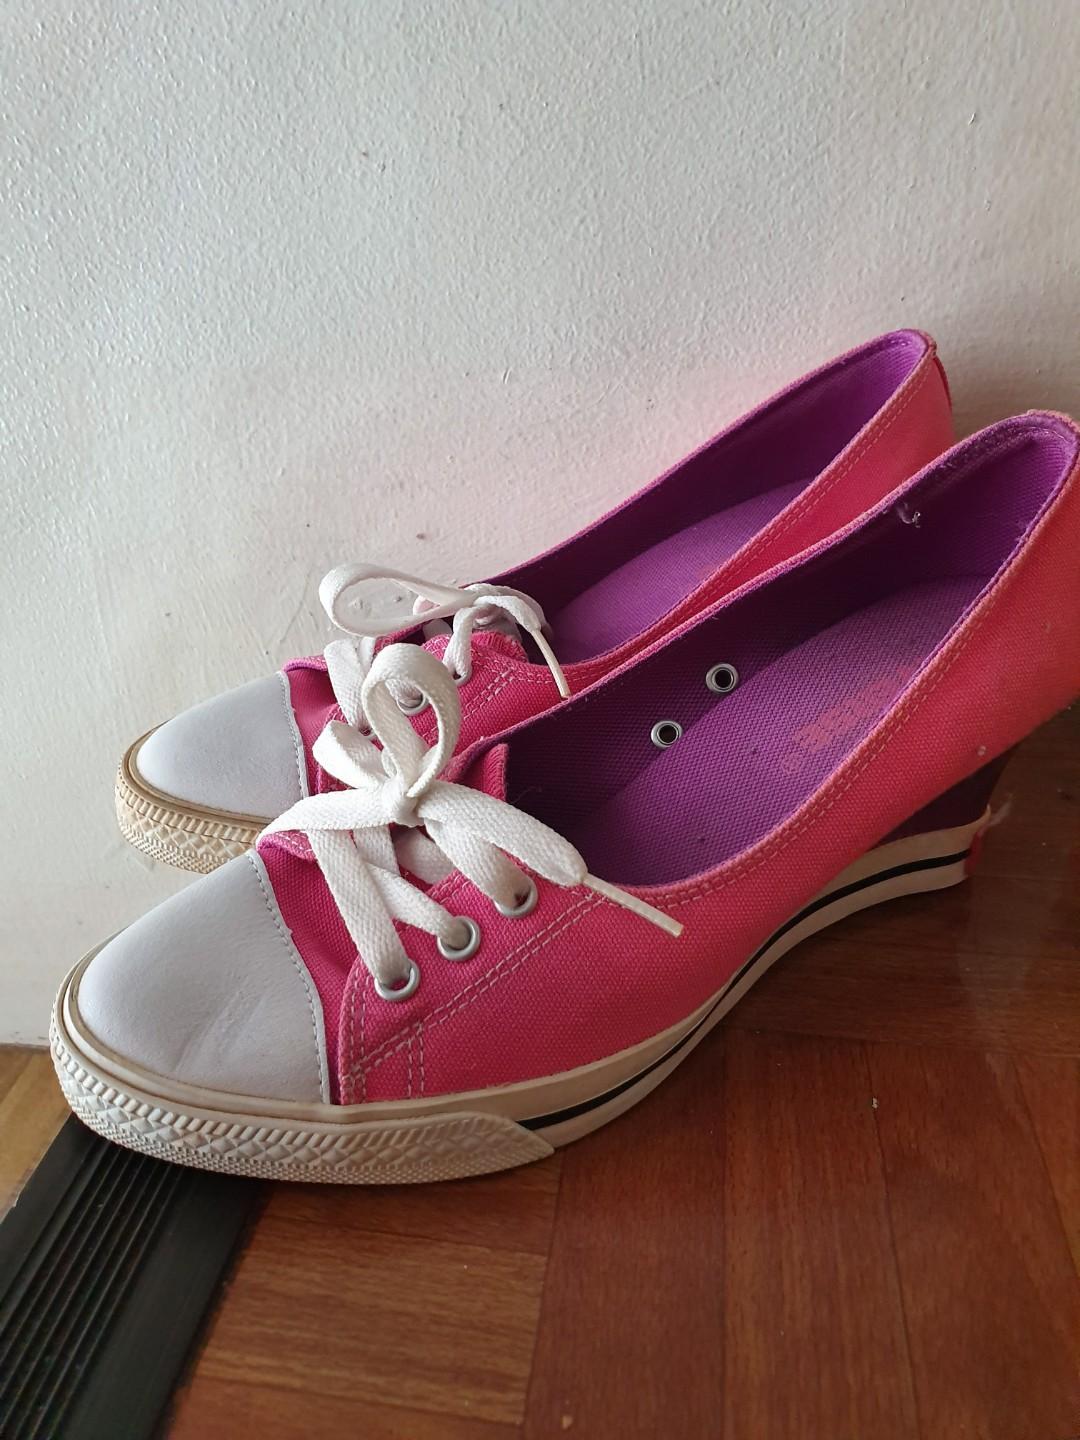 pink converse heels